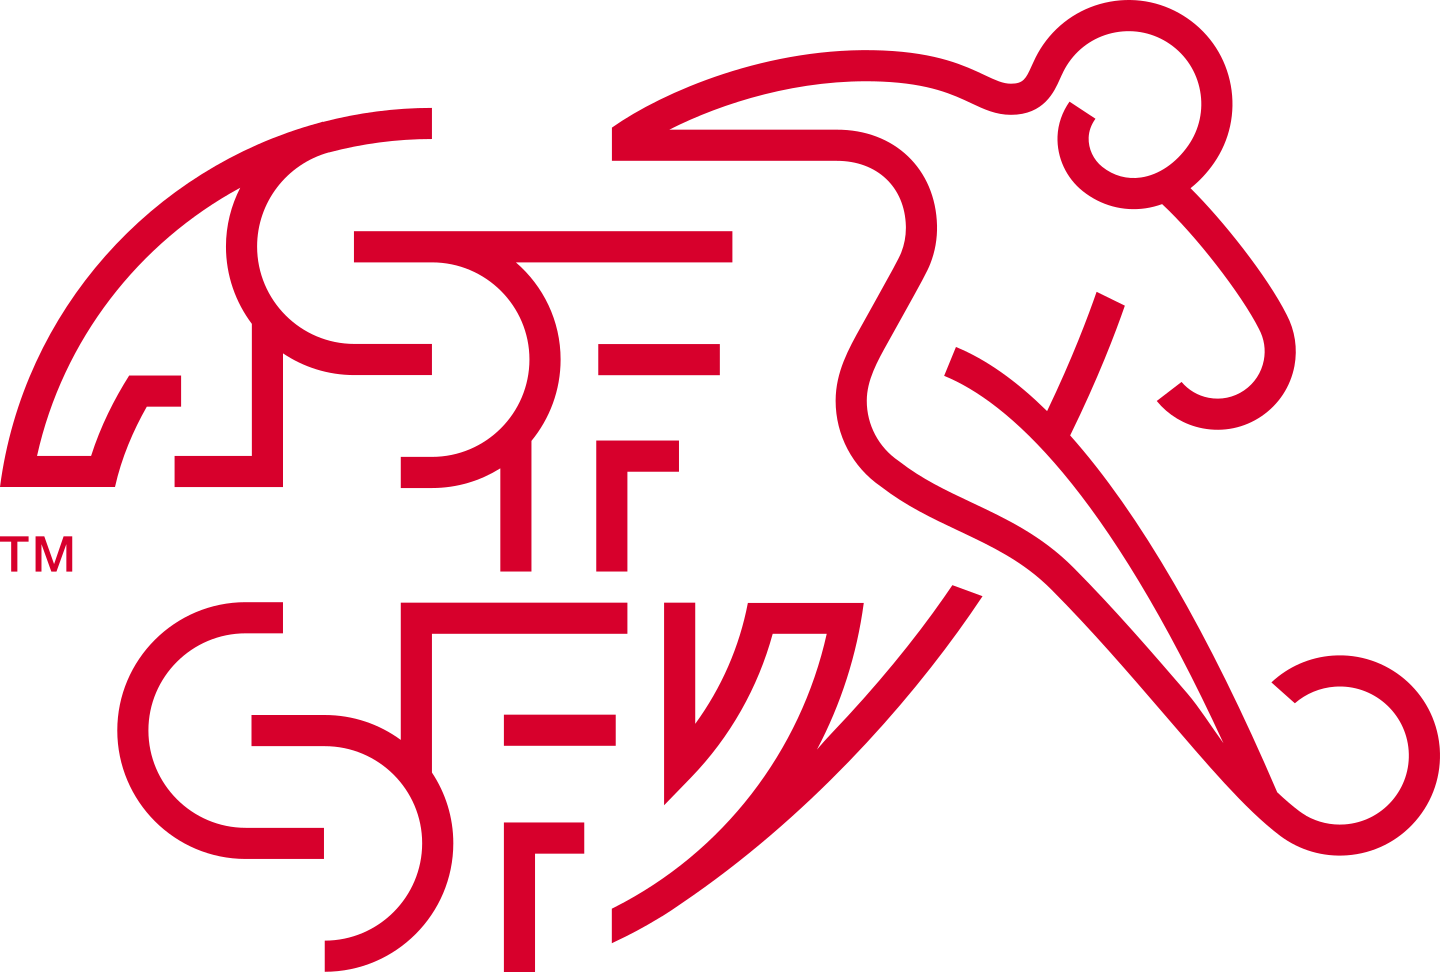 switzerland national football team logo 2 - Switzerland National Football Team Logo